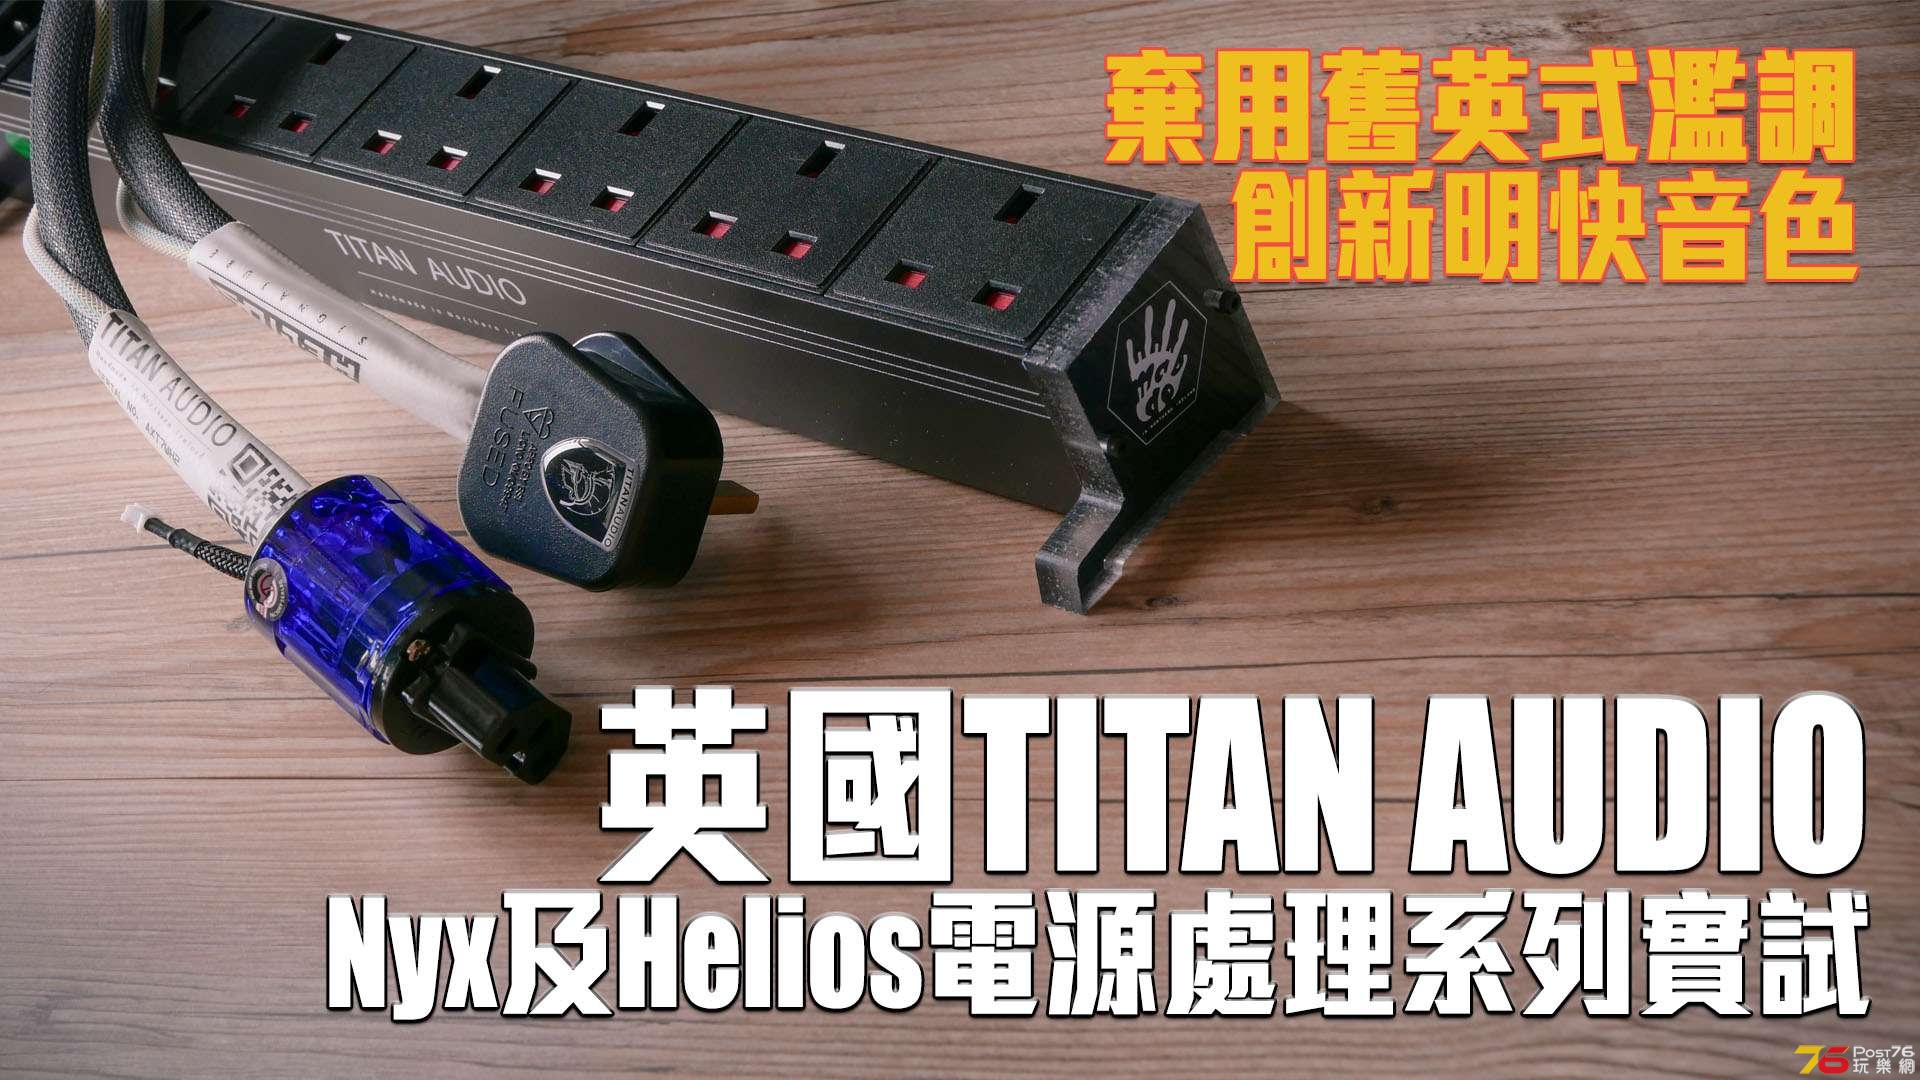 titan audio.jpg